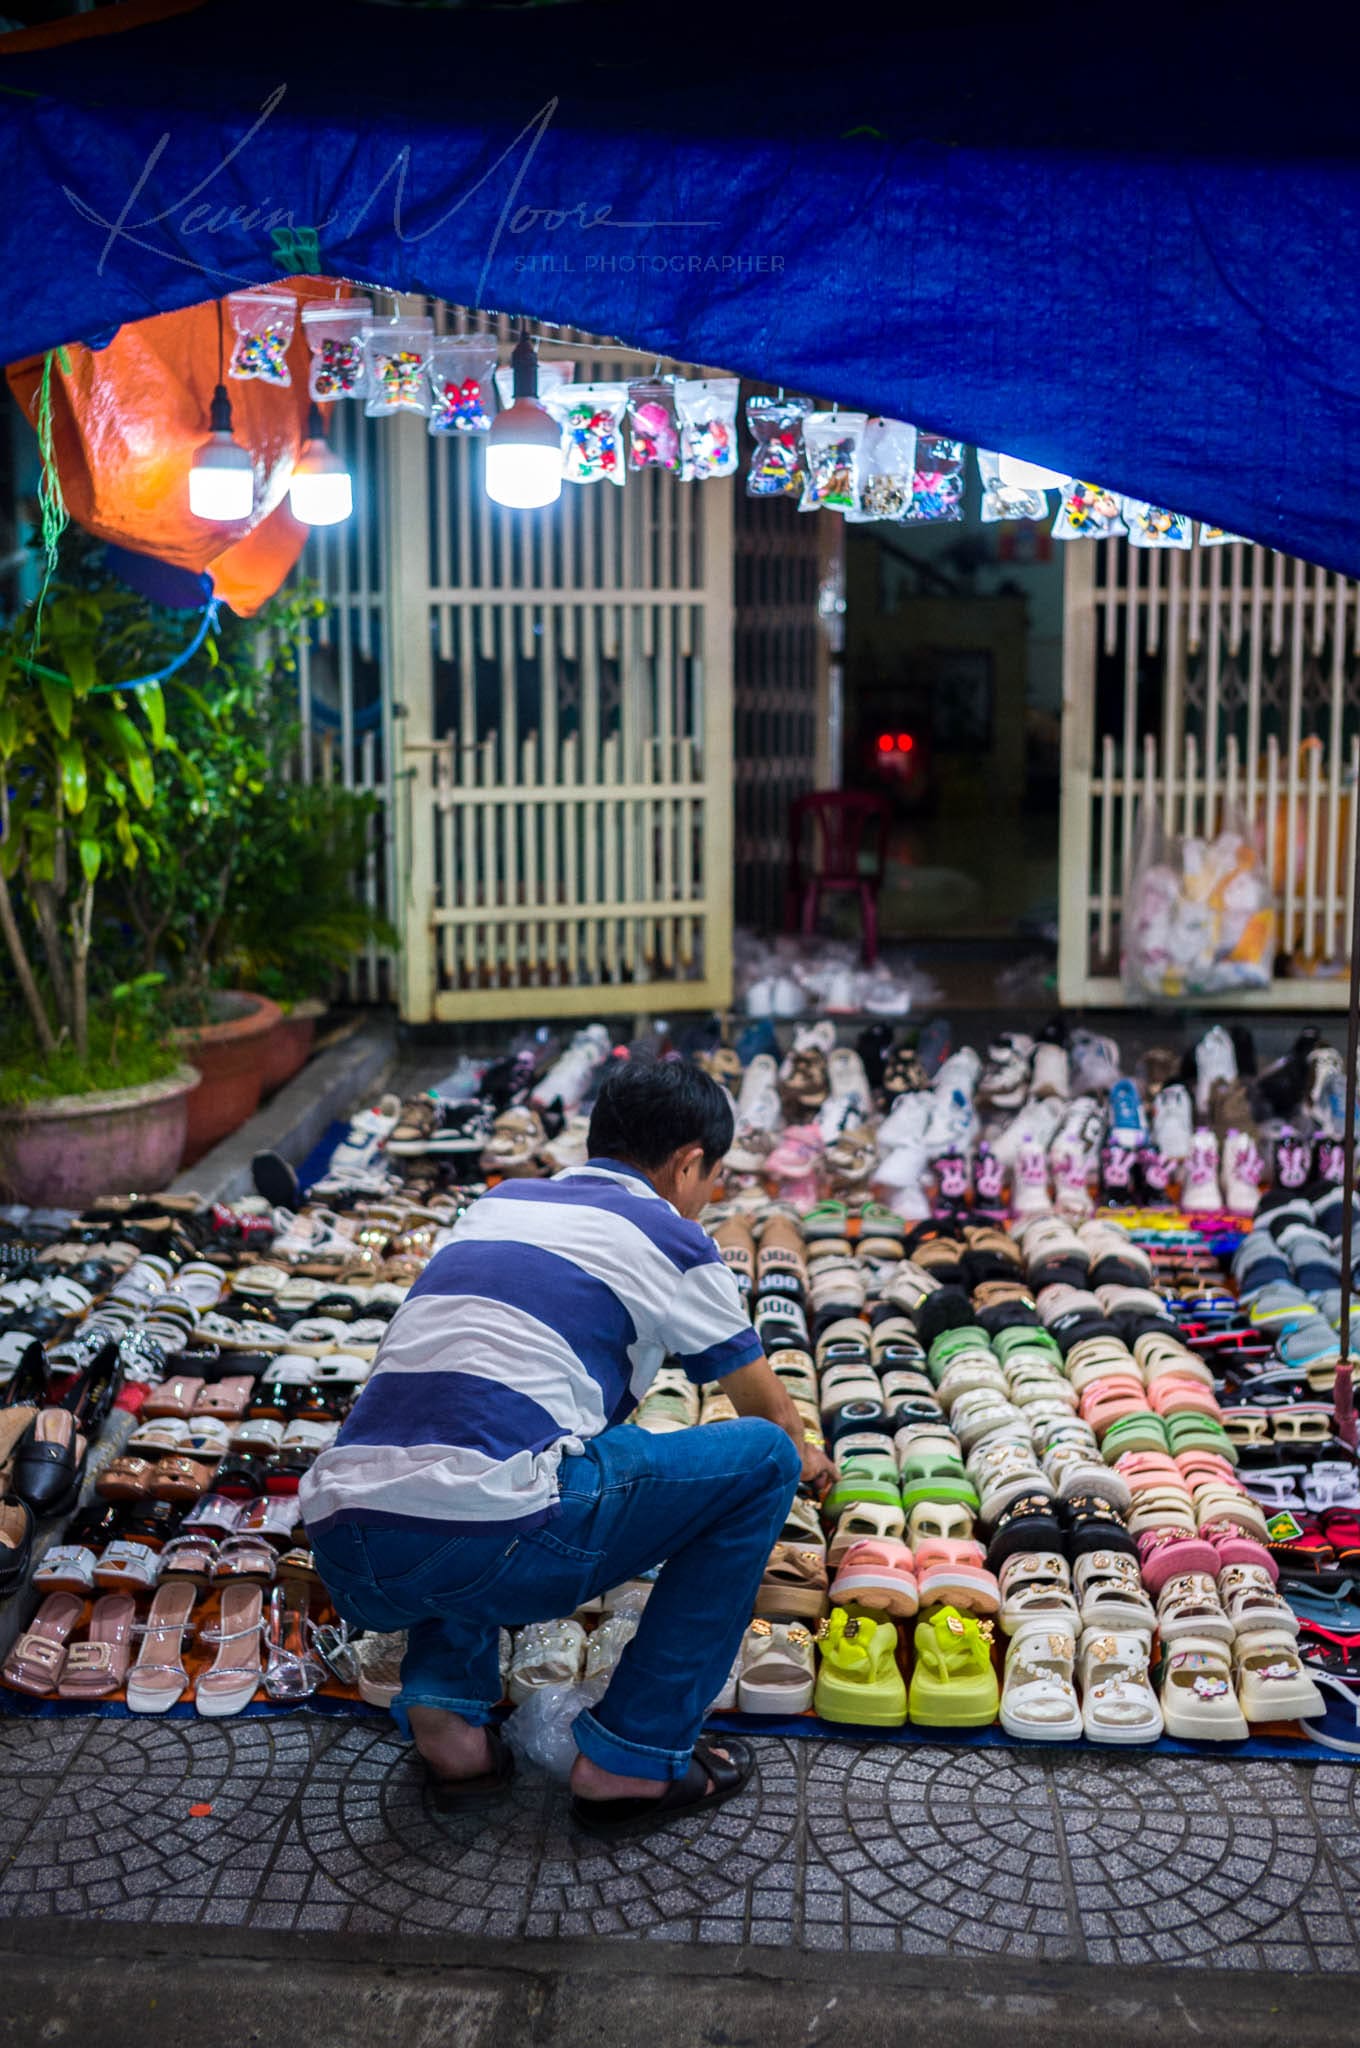 Nighttime shoe vendor organizing diverse footwear collection under a blue tarp at a street market.